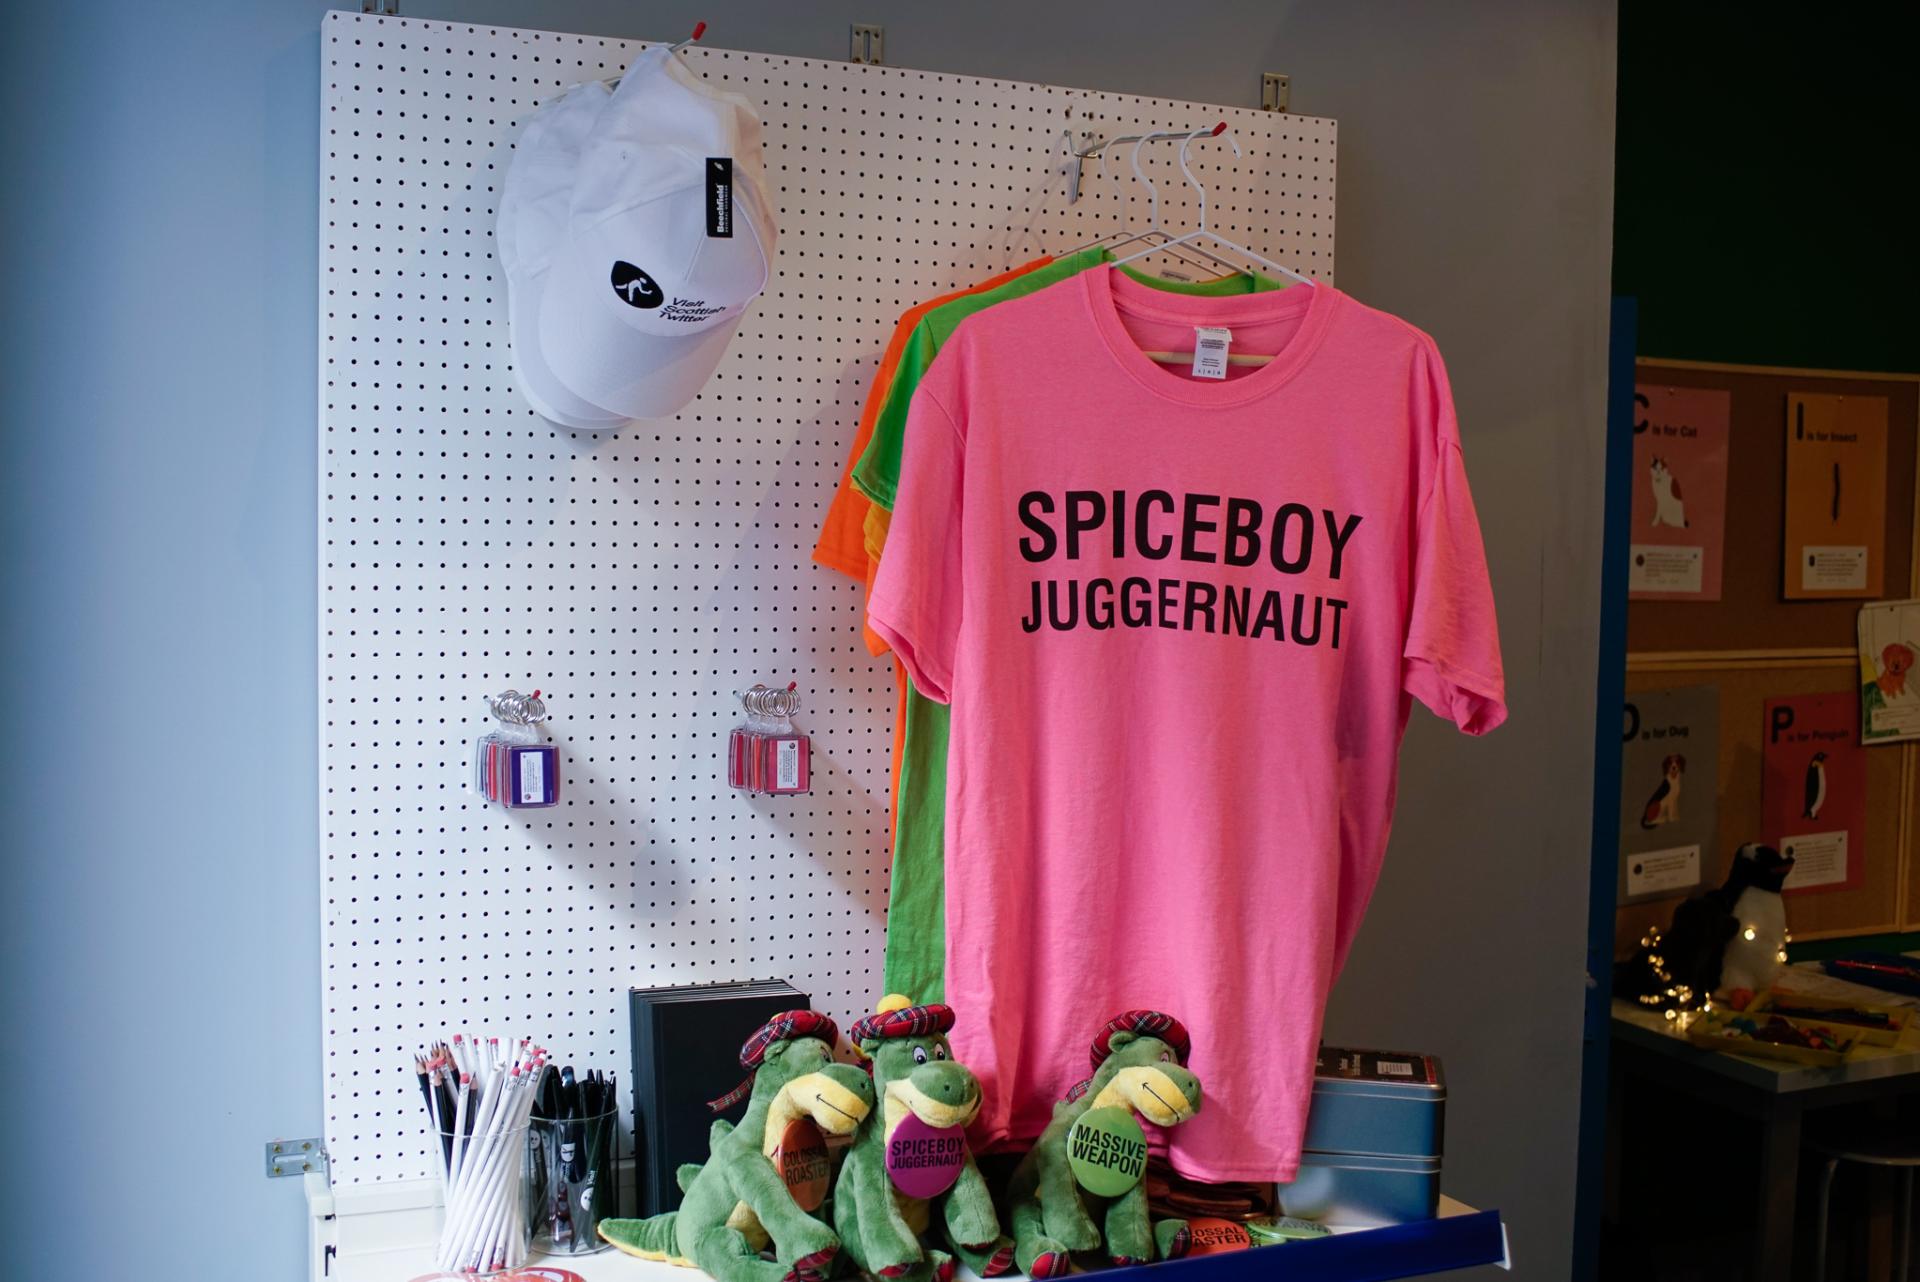 Spiceboy Juggernaut t-shirt in the gift shop